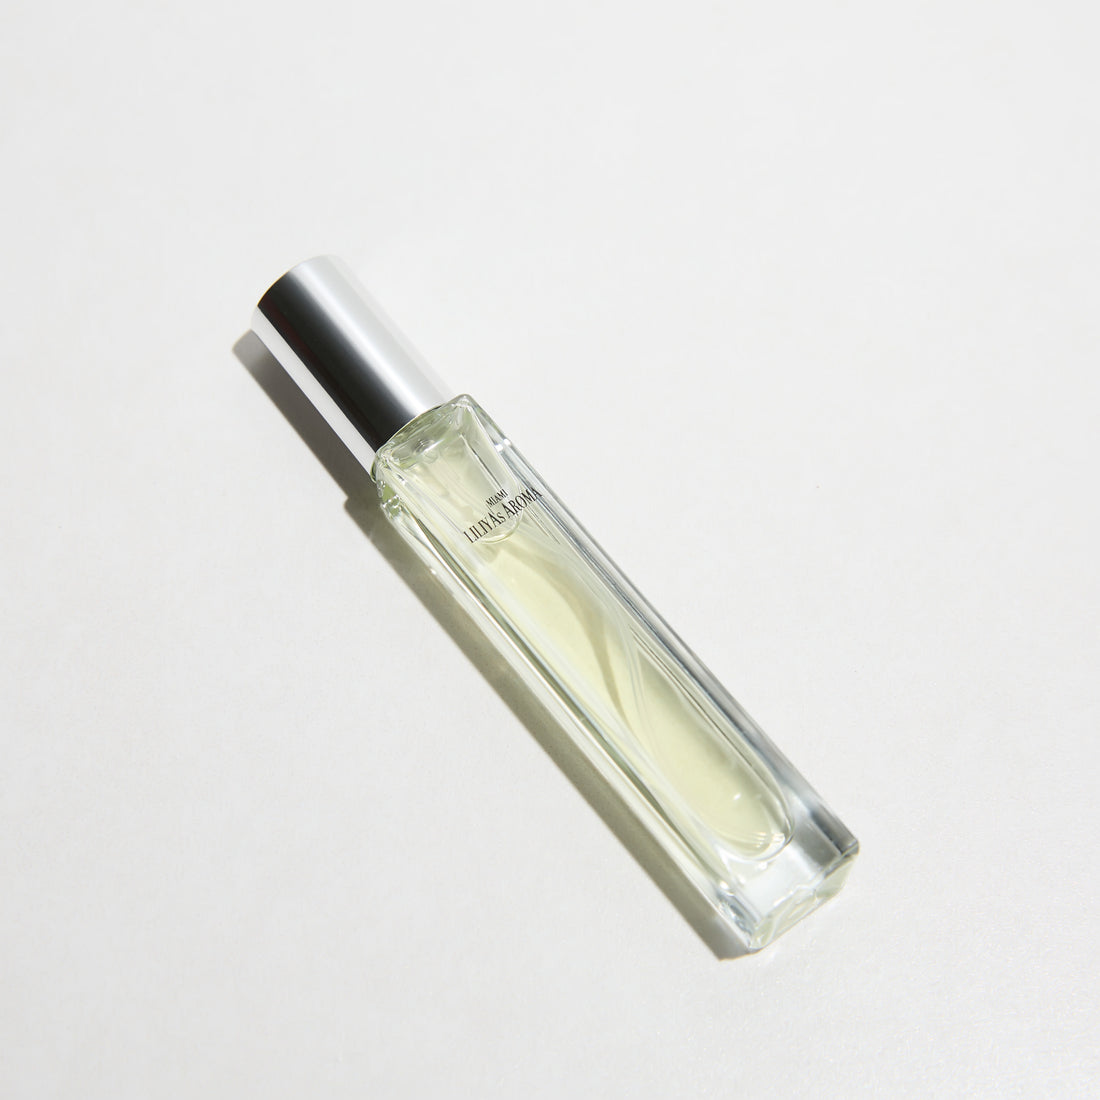 Orange - Ylang Ylang - Voyage Vibes - Travel Perfume for Women and Men - Long Lasting Fragrance 0.34 Fl Oz